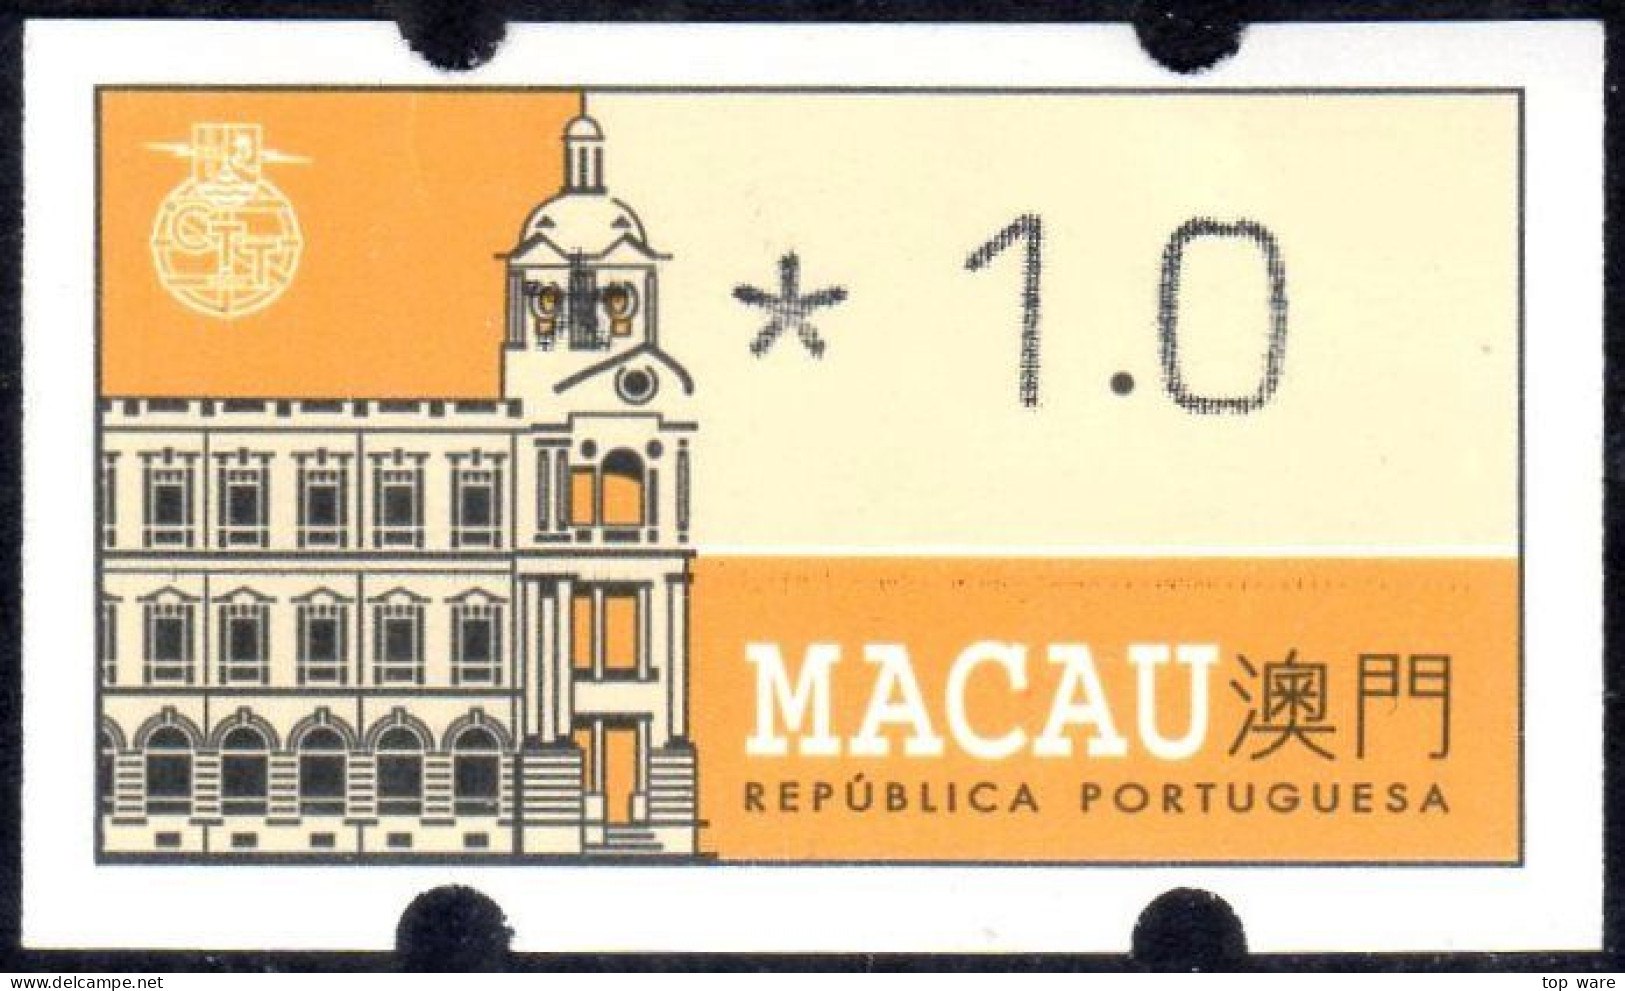 1993 China Macau ATM Stamps Main Post Office / MNH / Klussendorf Automatenmarken Etiquetas Automatici Distributeur - Automatenmarken